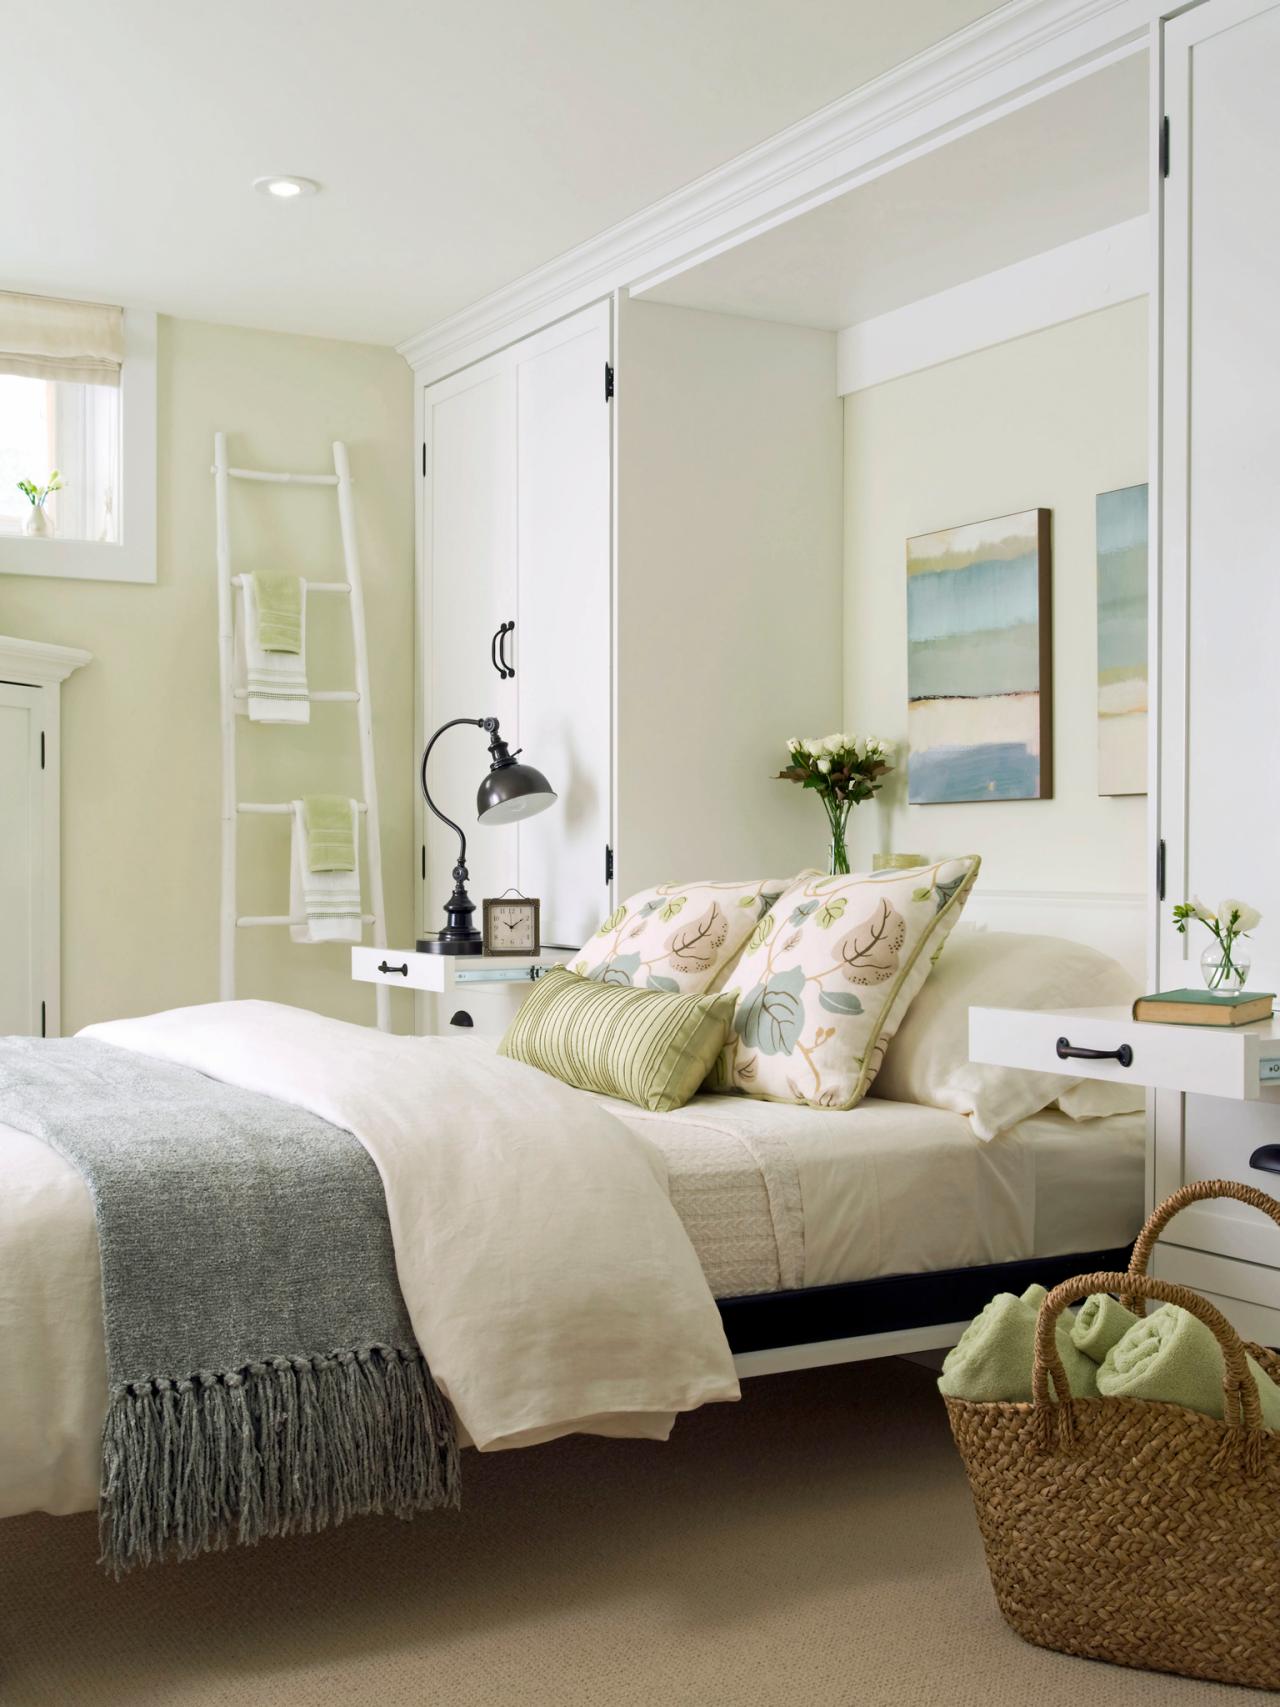 14 Ideas For Small Bedroom Decor Hgtv S Decorating Design Blog Hgtv,Modern Style Latest Dressing Table Design 2019